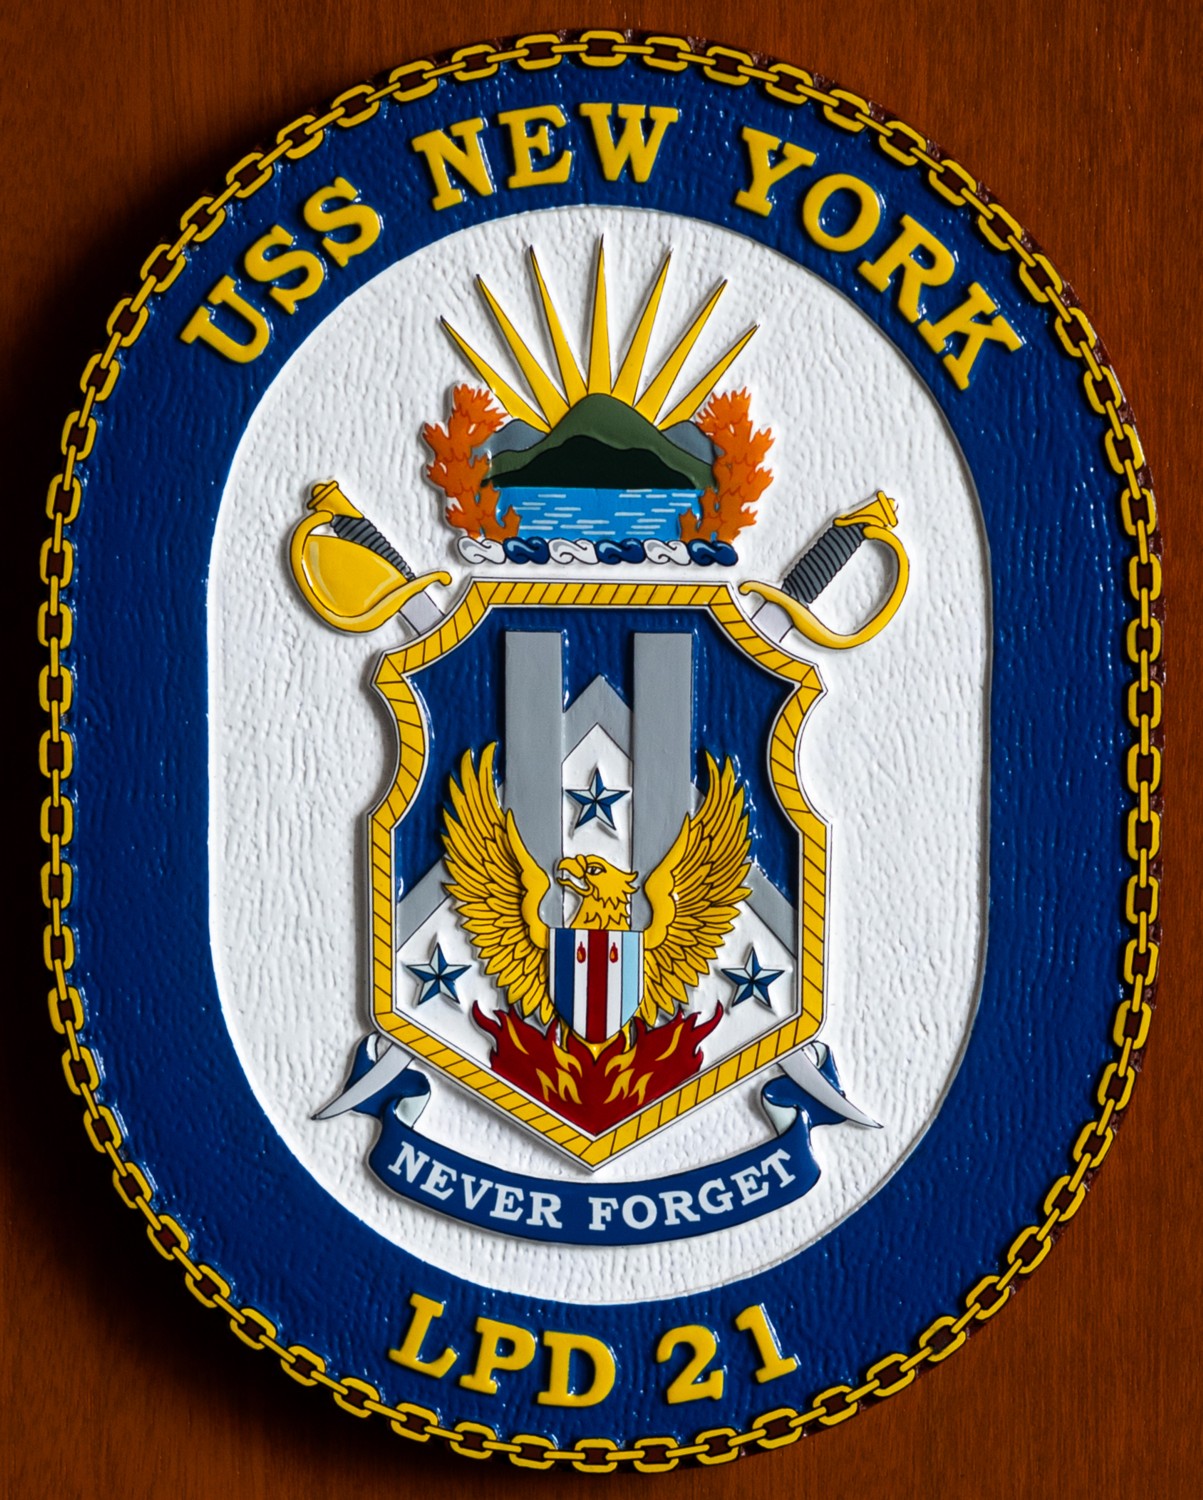 lpd-21 uss new york insignia crest patch badge san antonio class amphibious transport dock ship 04c